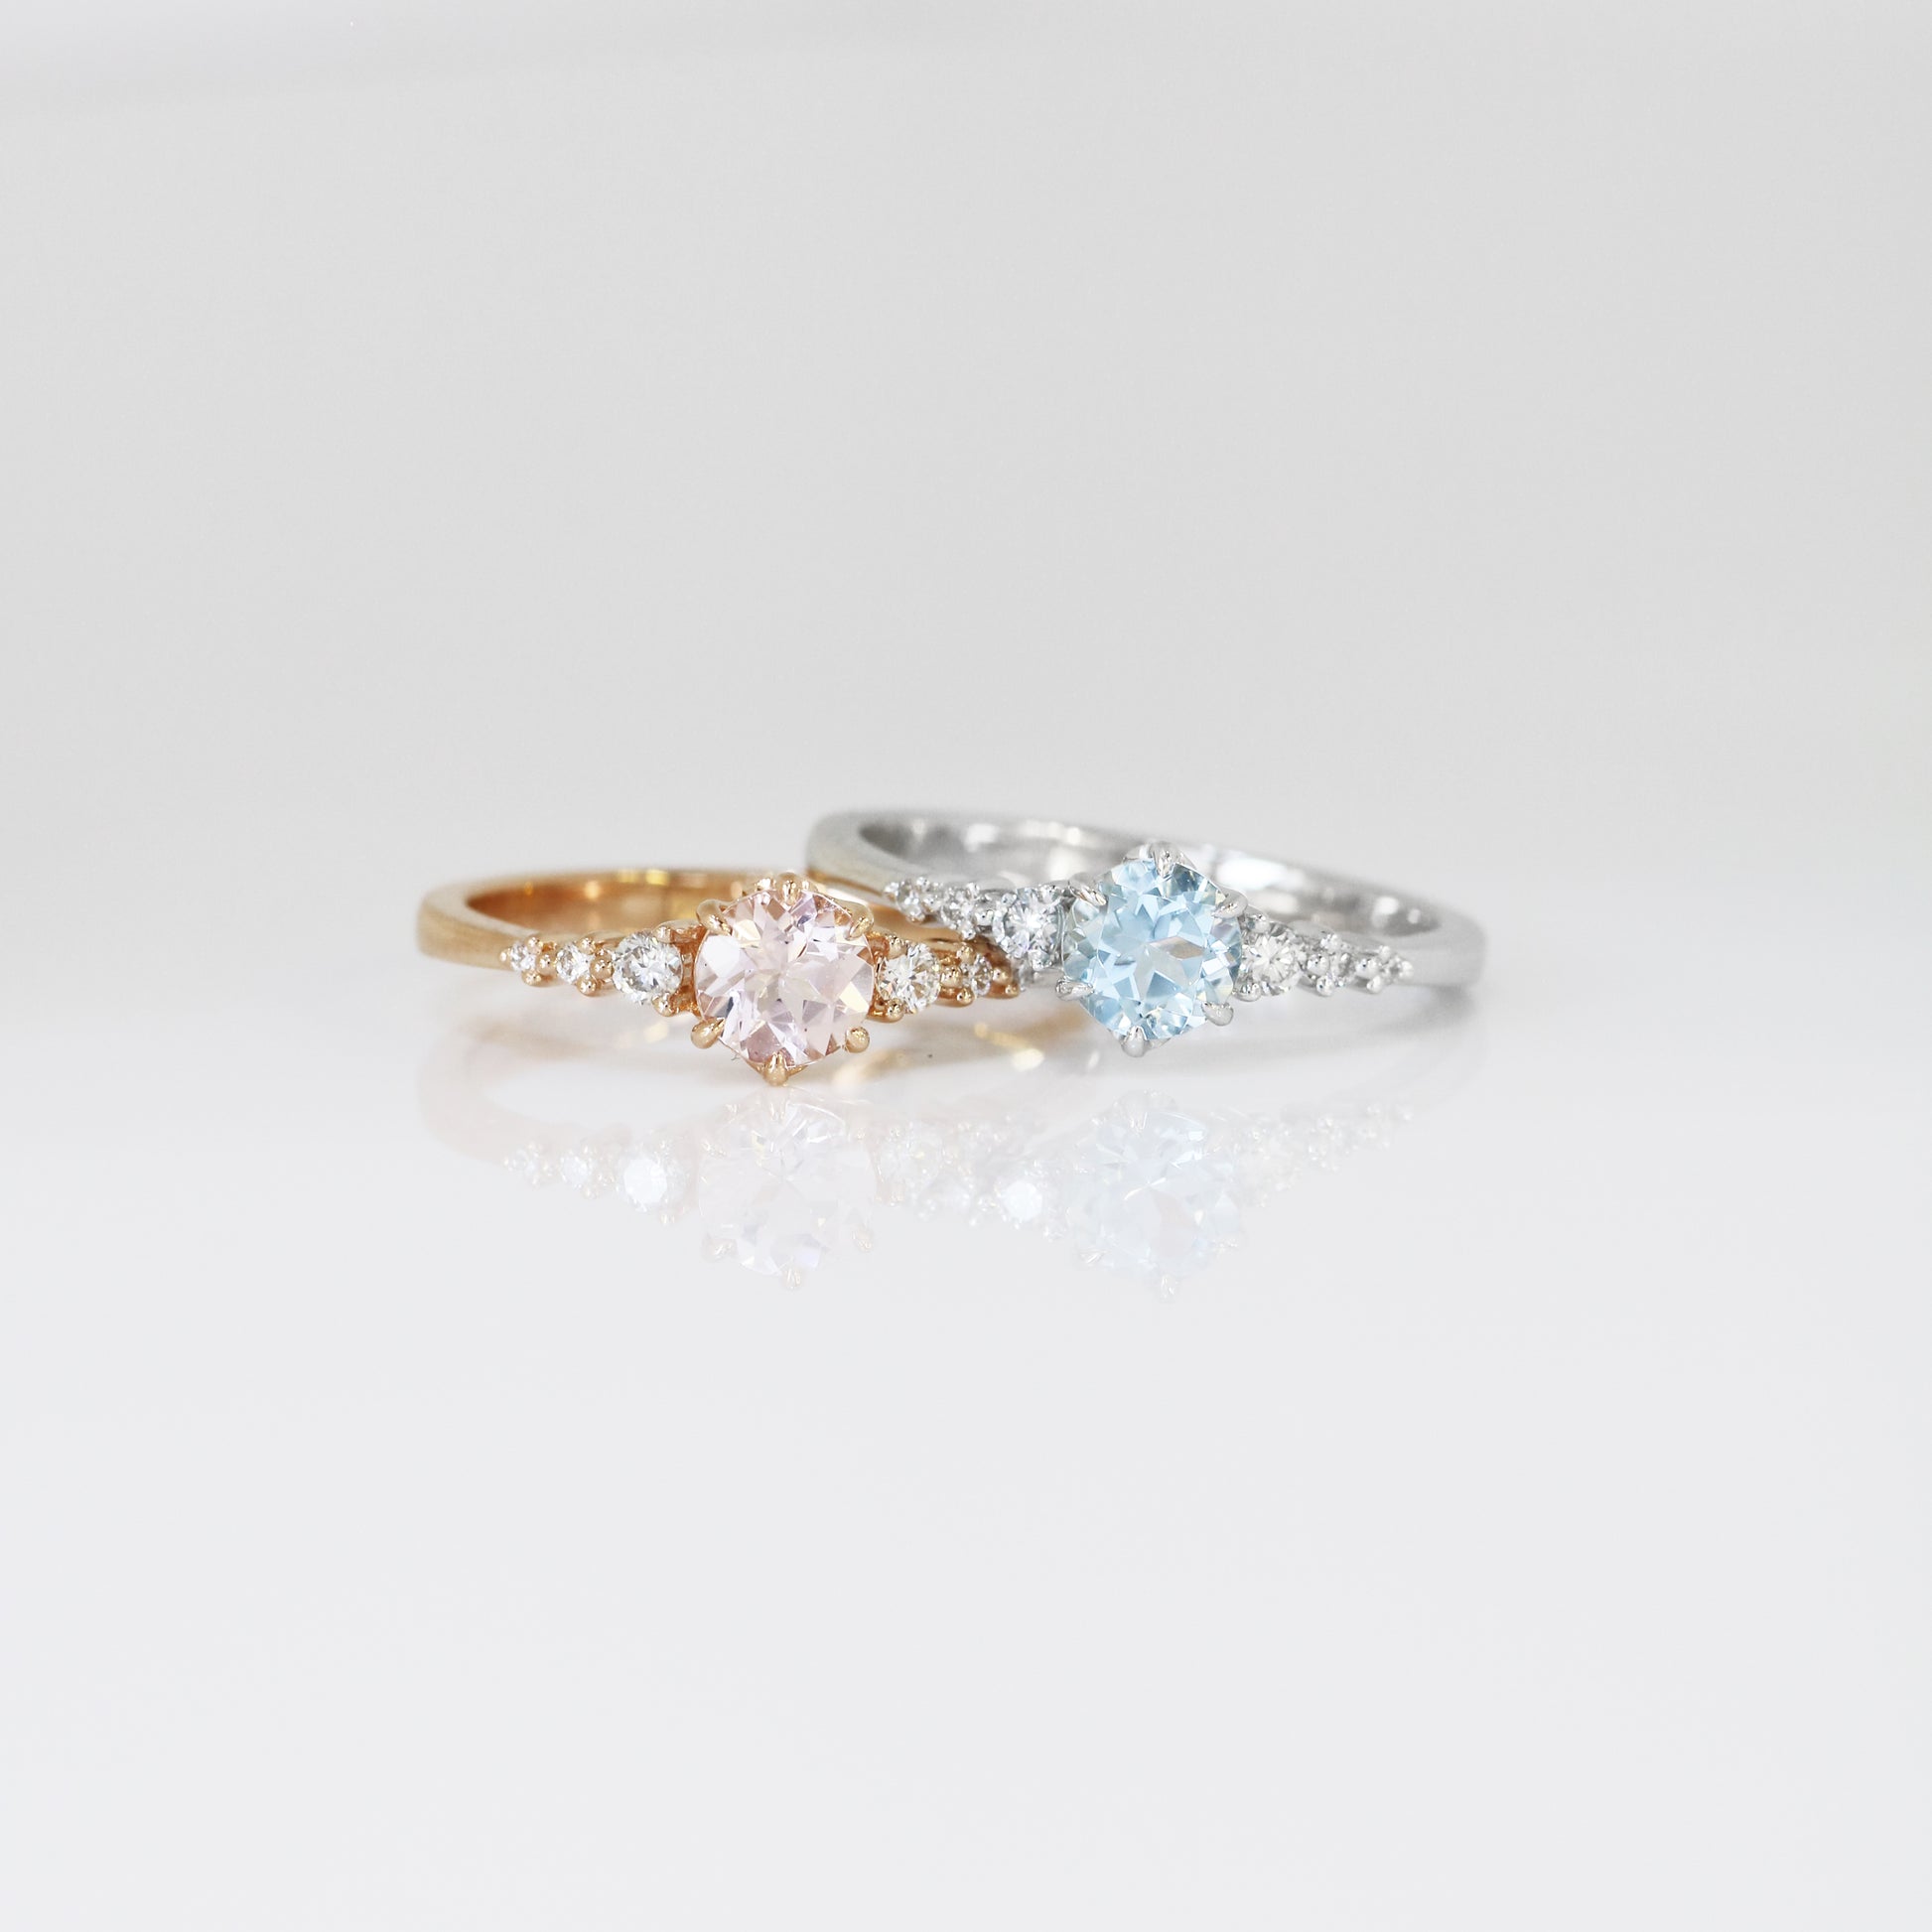 18k白金海藍寶和摩根石鑽石戒指側面 18k White Gold Aquamarine and Morganite Diamond Ring on side view